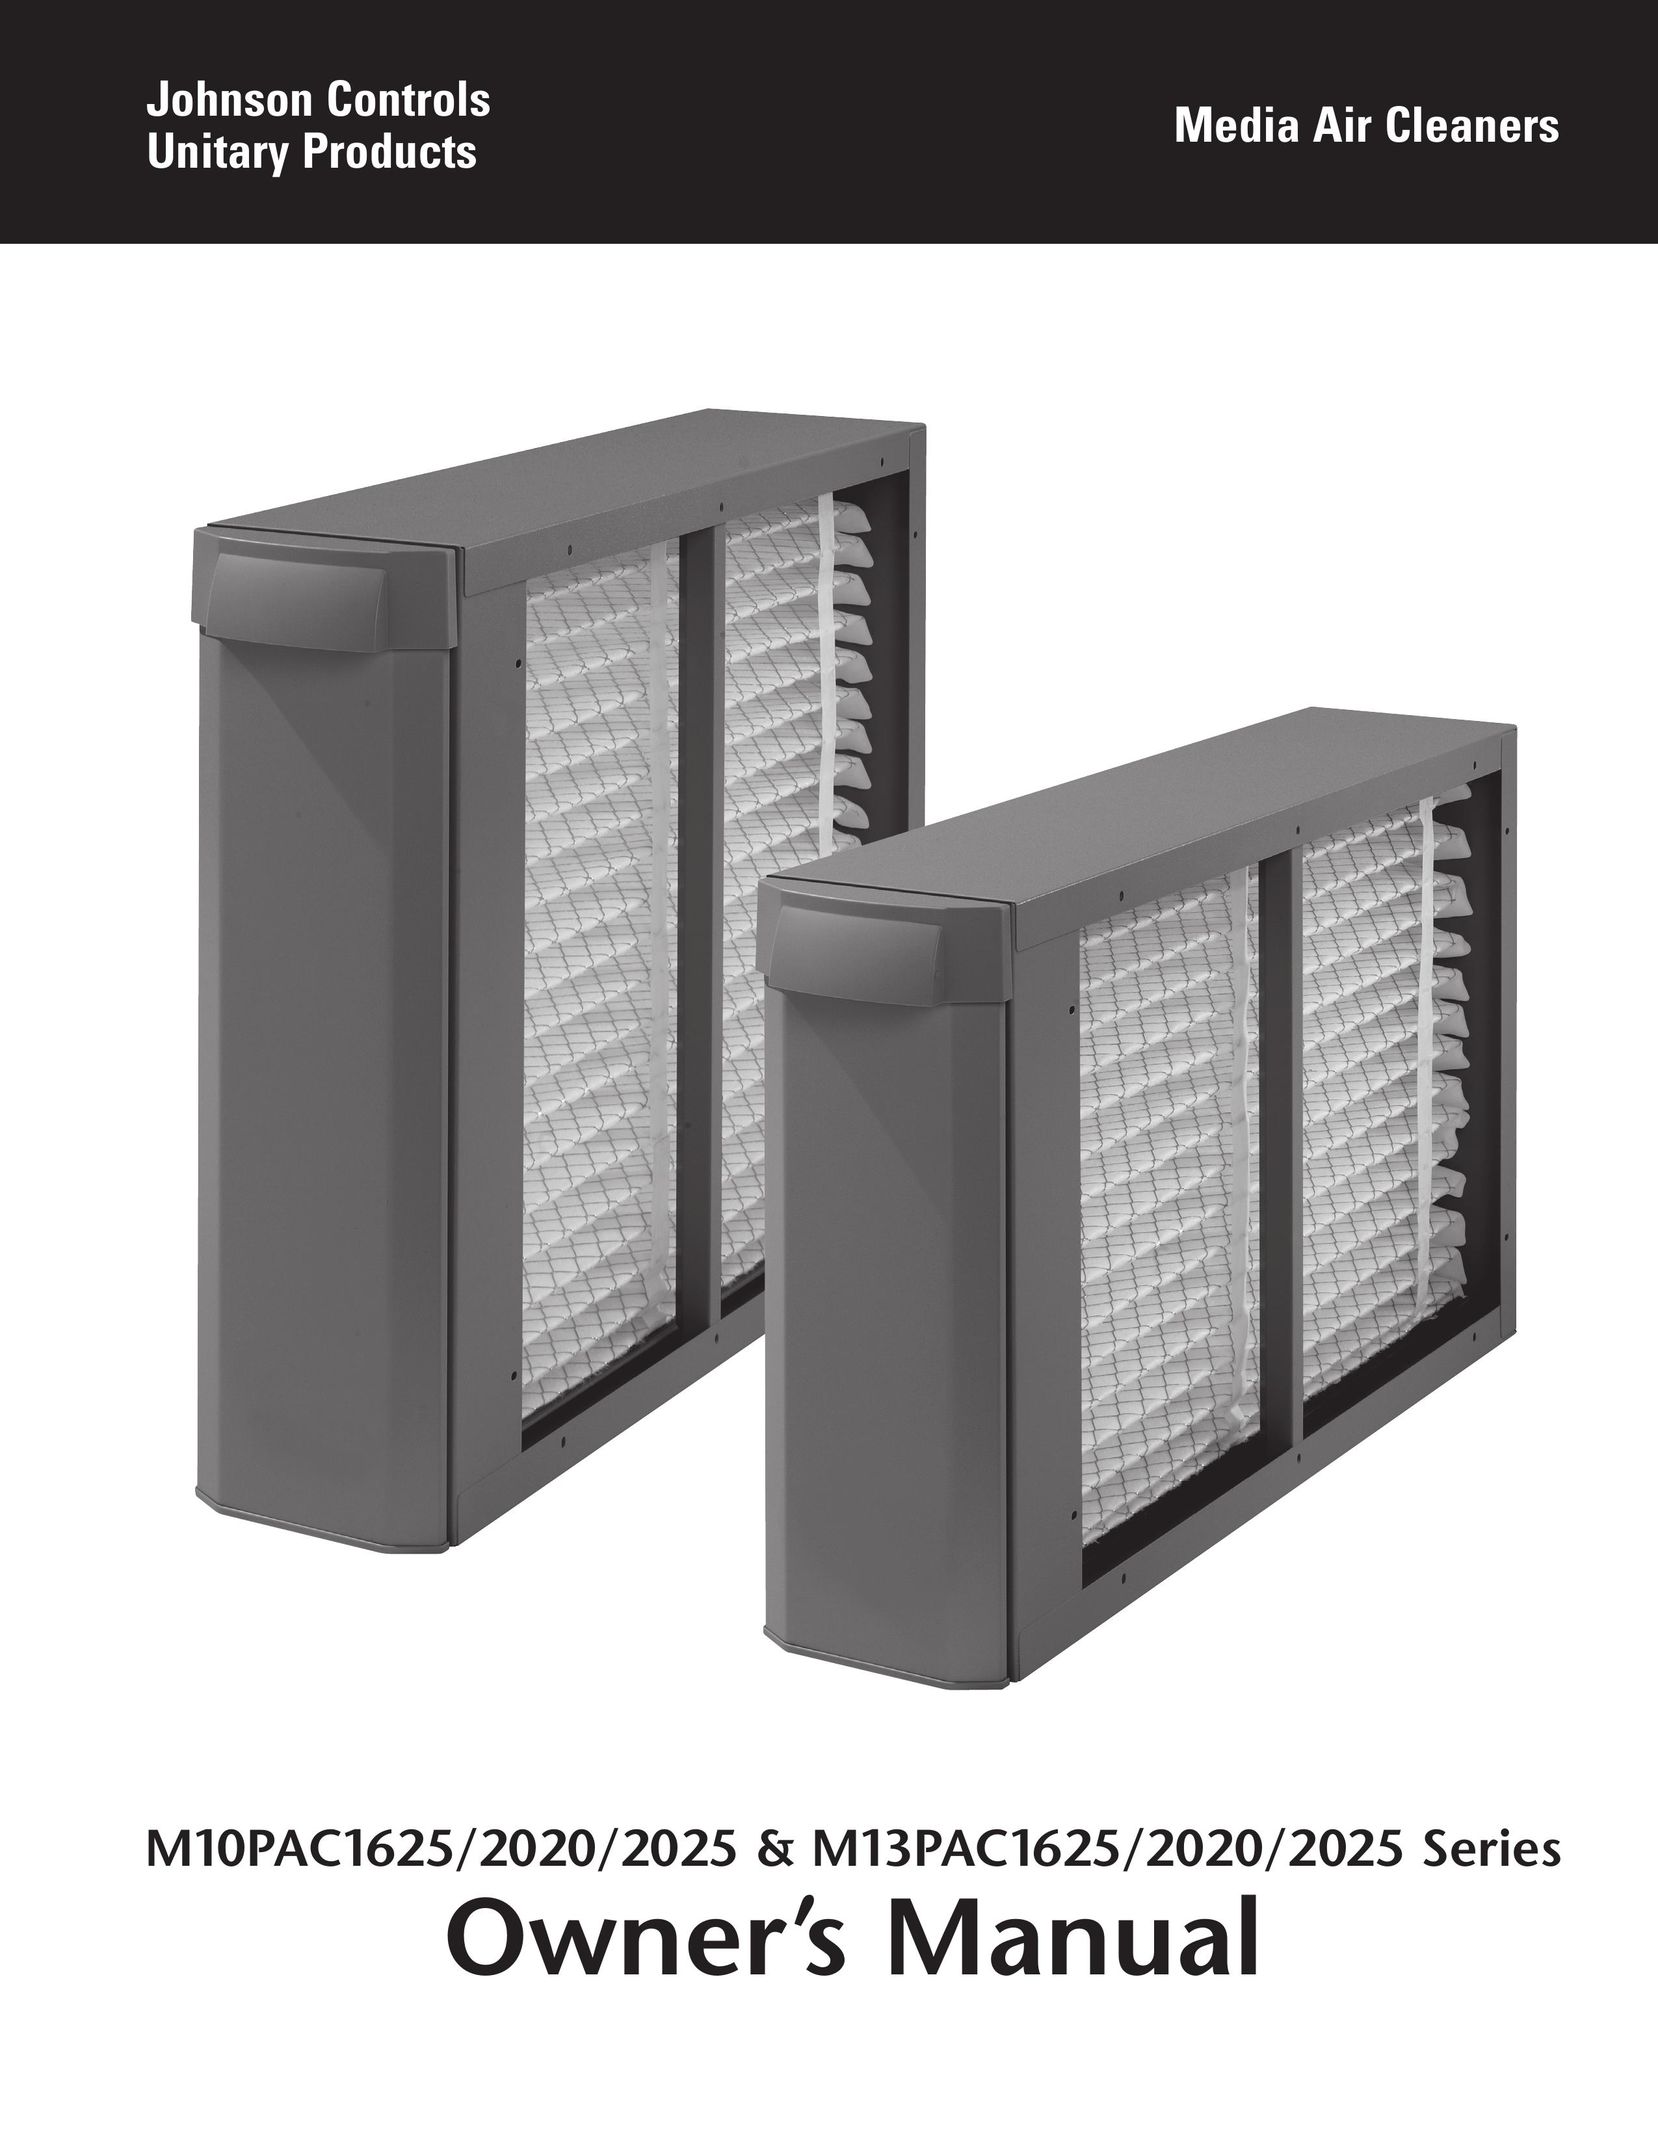 Johnson Controls M10PAC1625/2020/2025 Air Cleaner User Manual